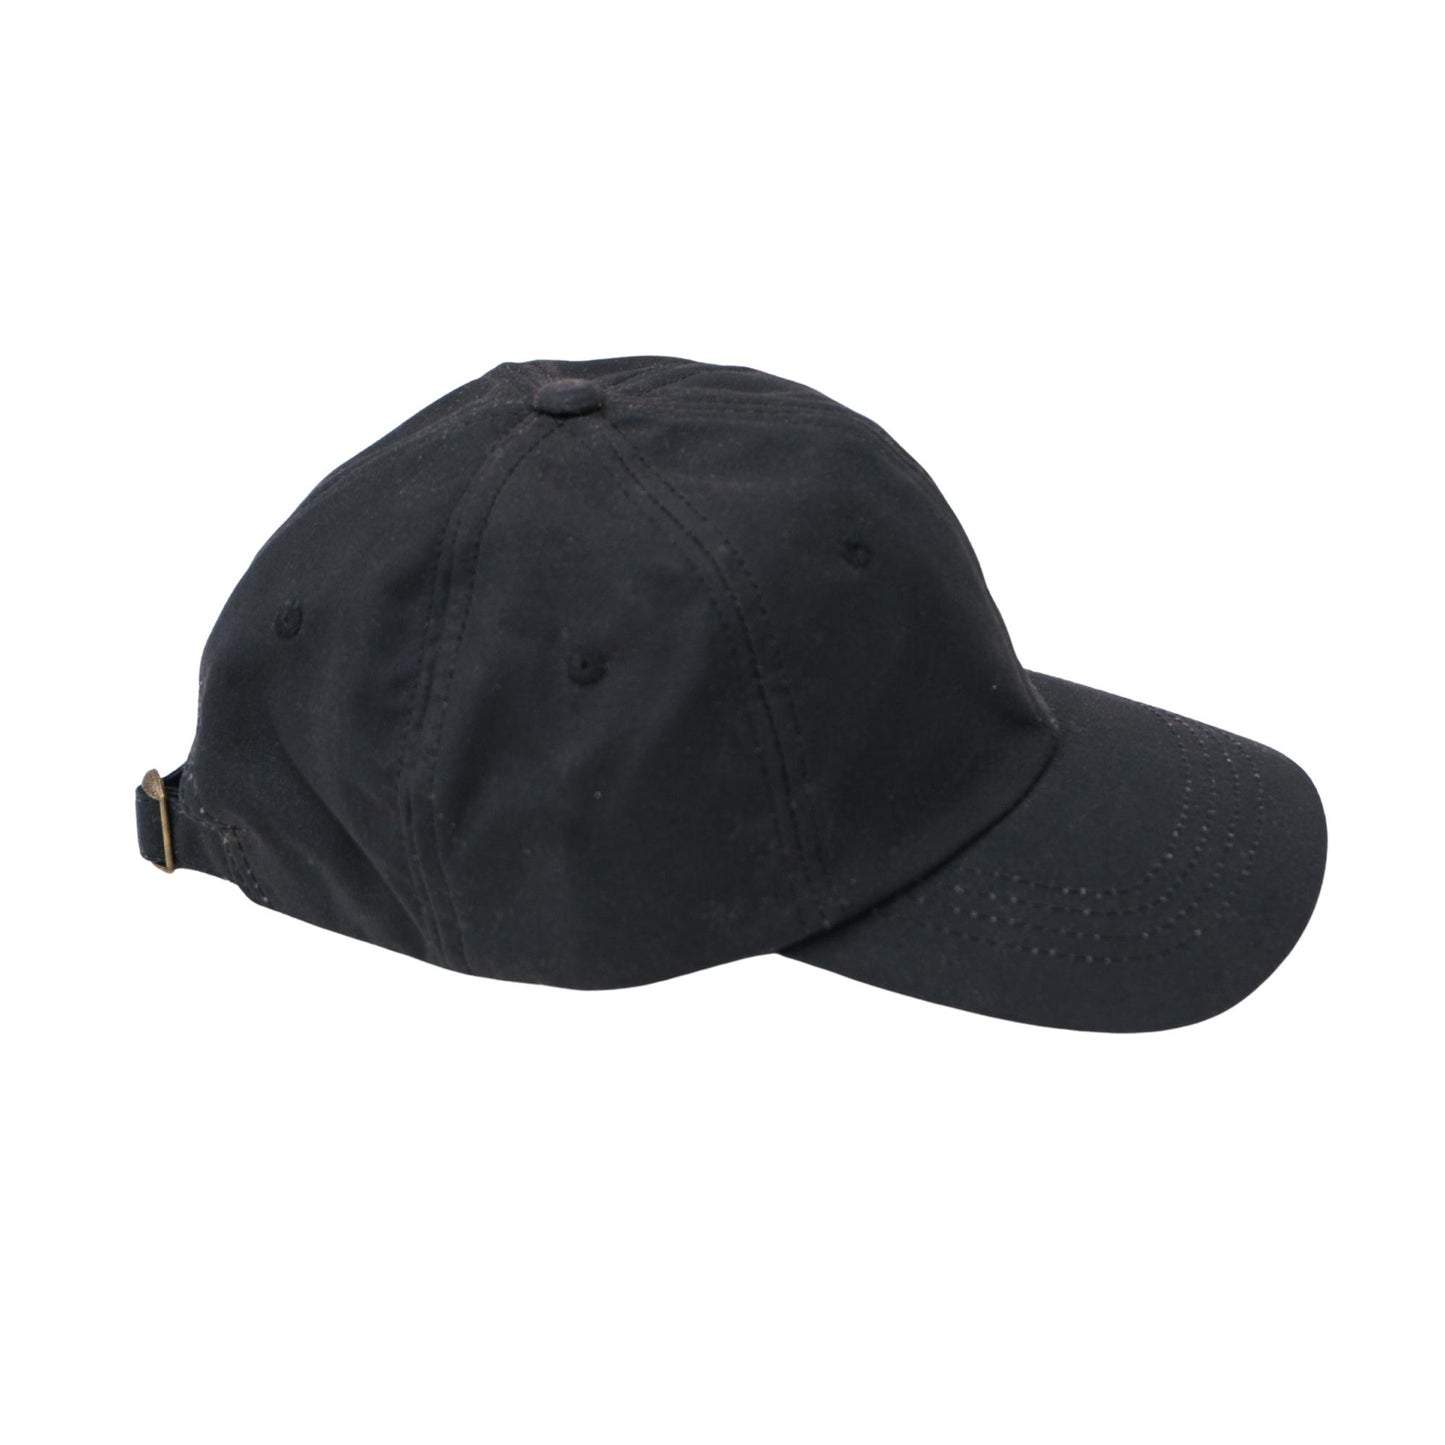 Waterproof Oilskin Cotton Baseball Cap, Adjustable Buckle, Handmade Hat